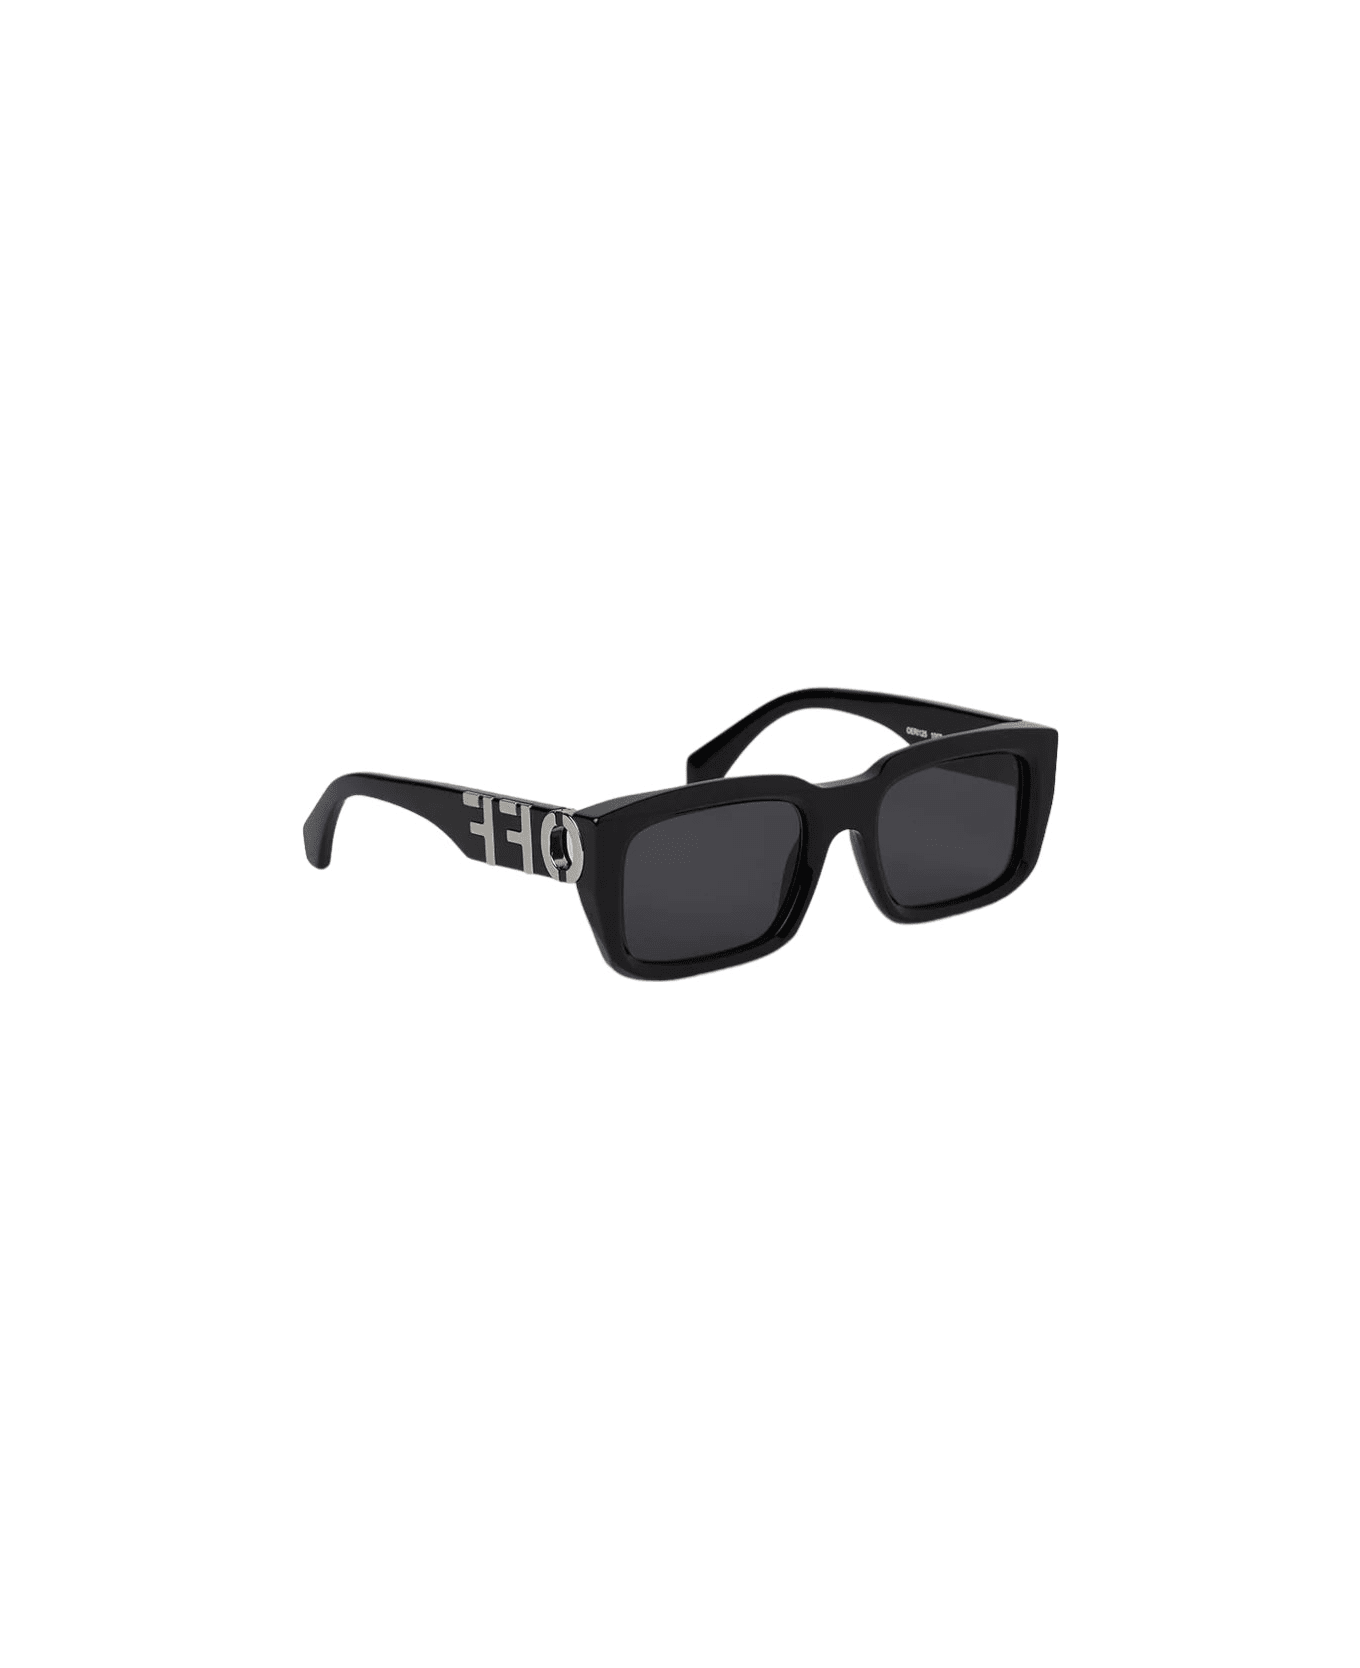 Off-White Hays - Oeri125 Sunglasses サングラス